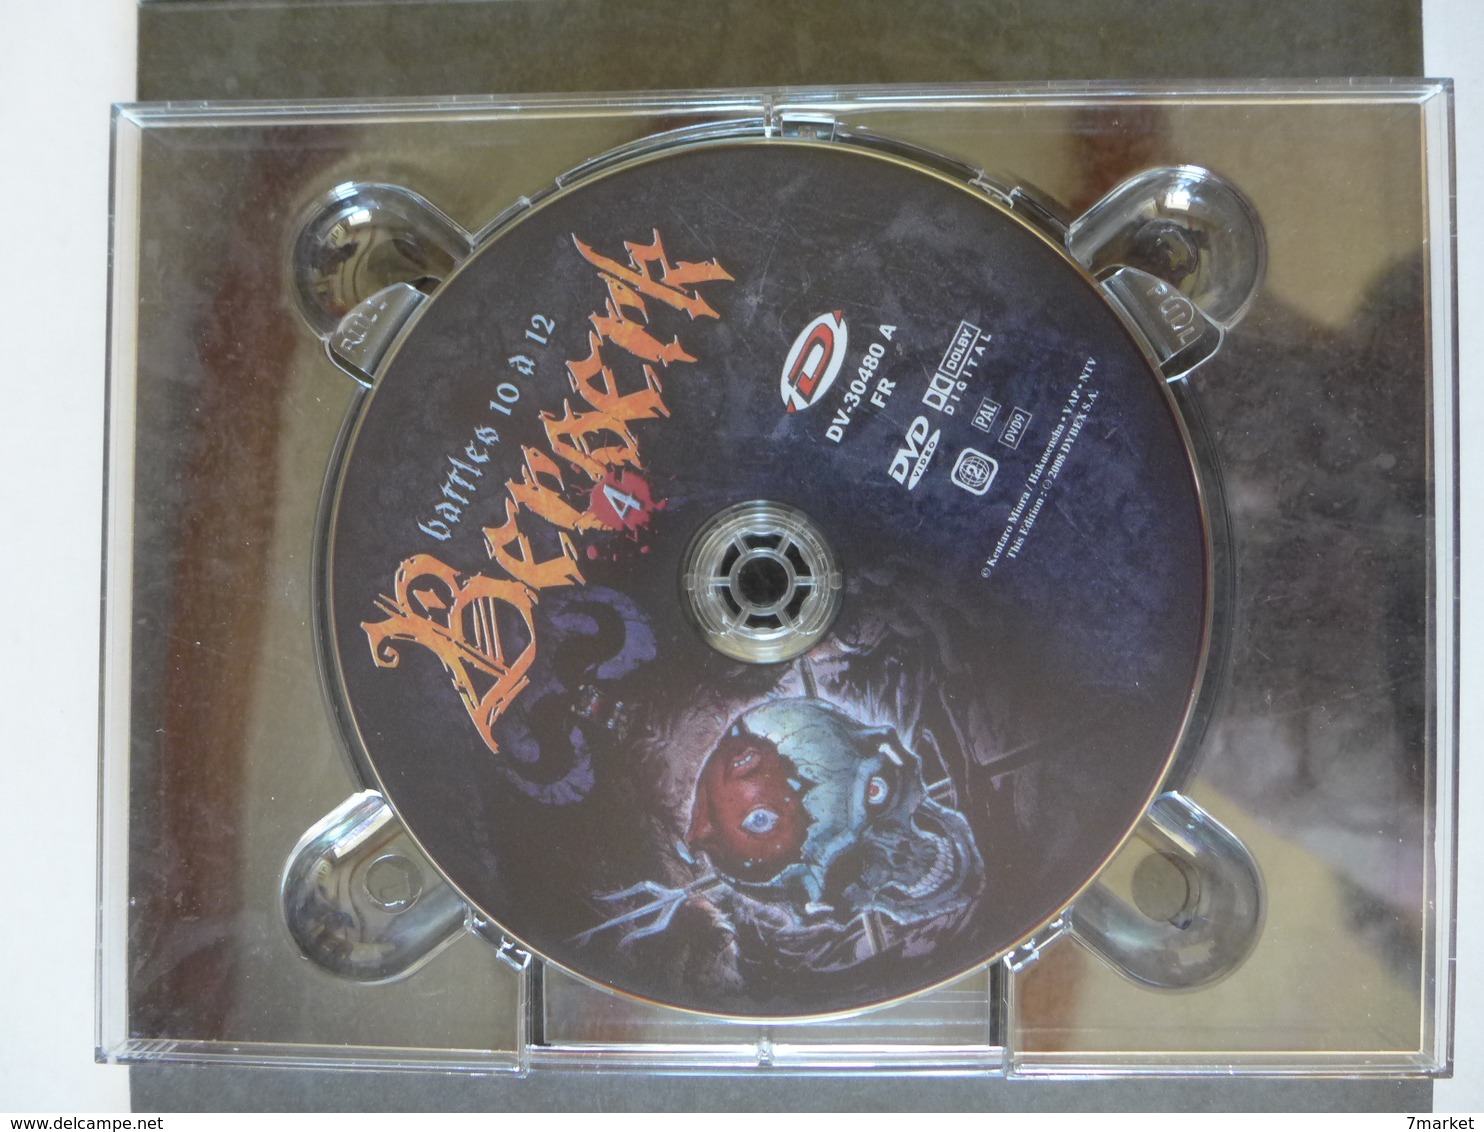 Berserk - L'intégrale édition Gold 9 DVD - Manga